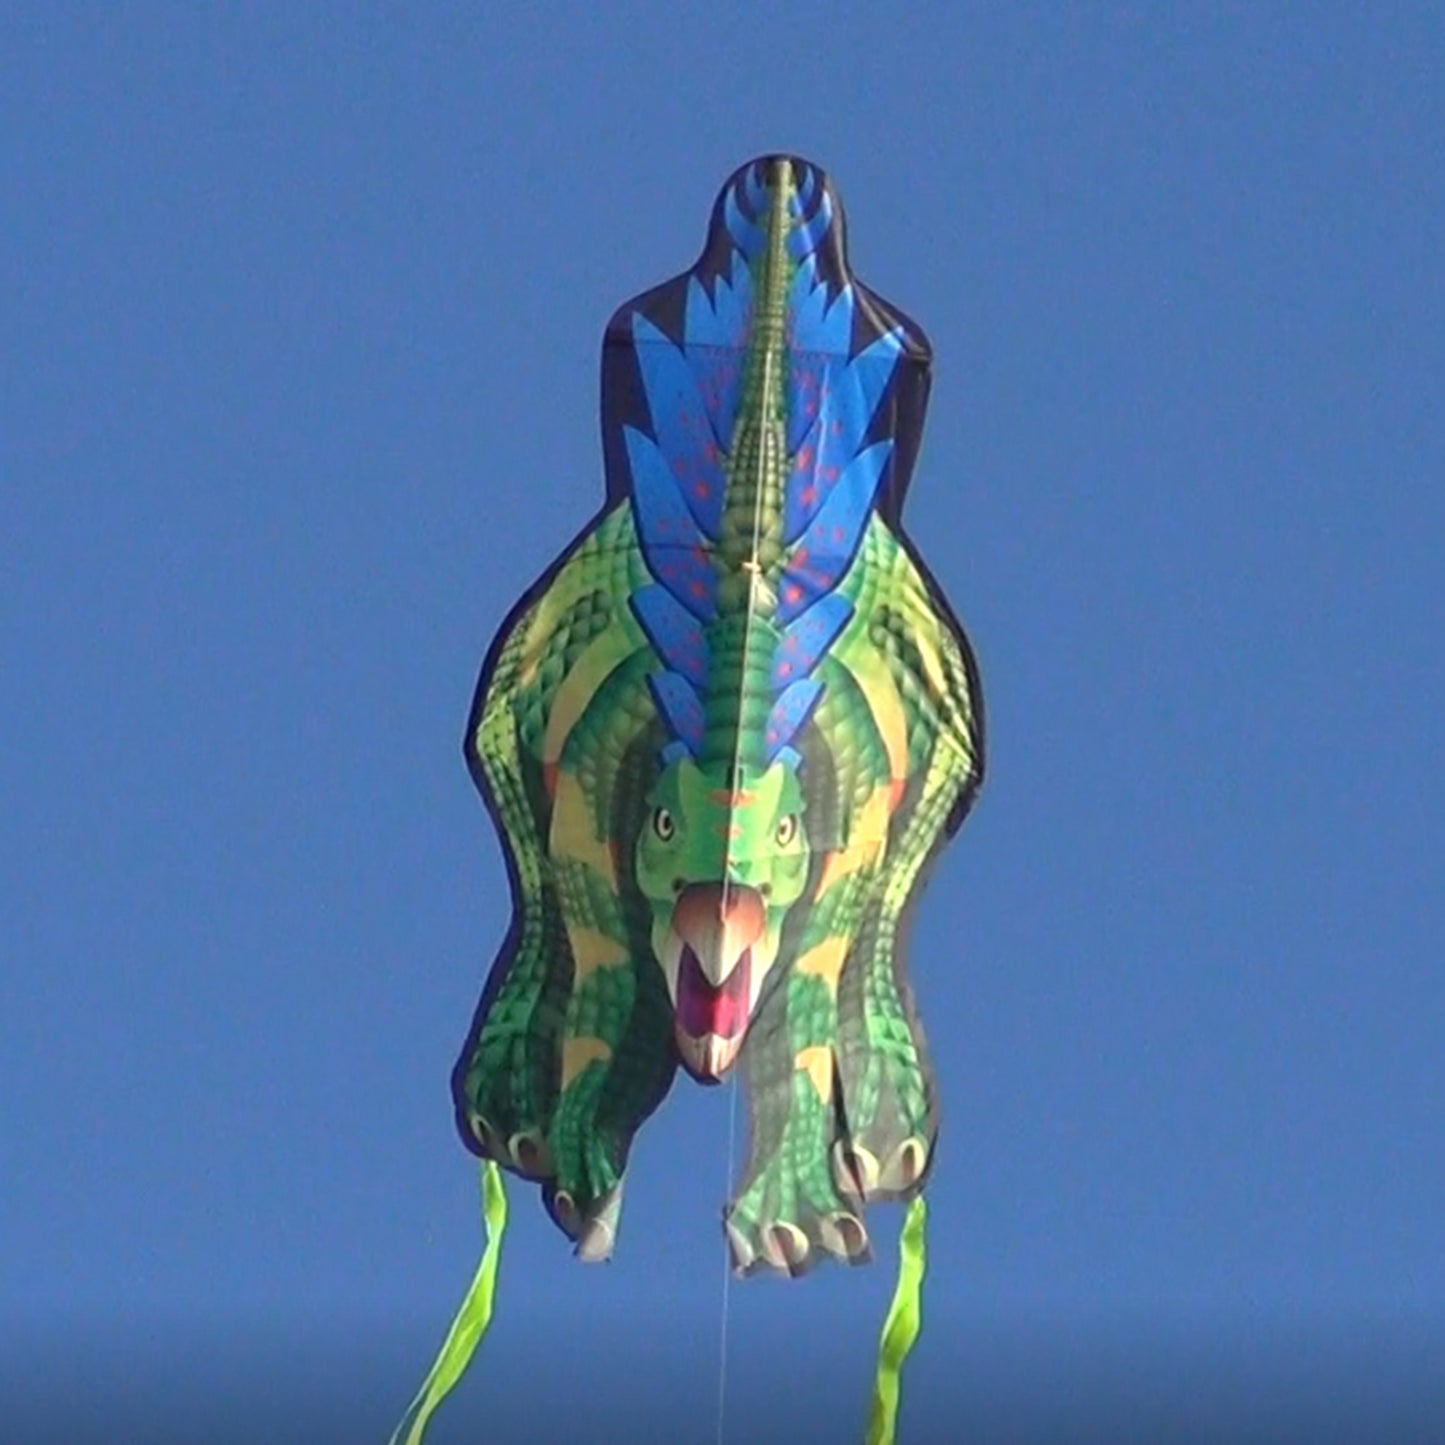 windnsun dinosoars stegosaurus nylon kite flying